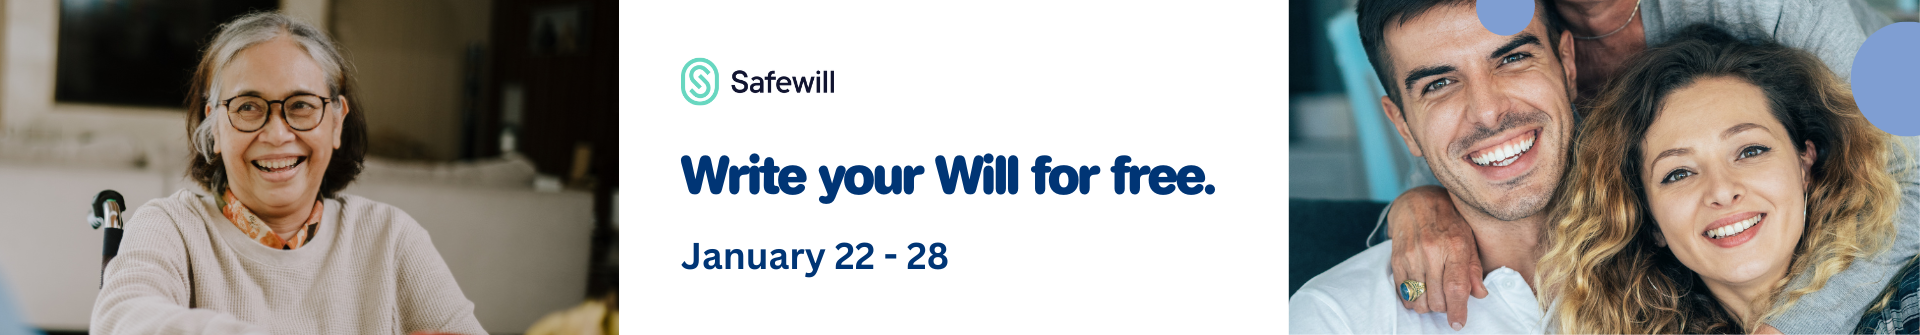 Free wills week 1